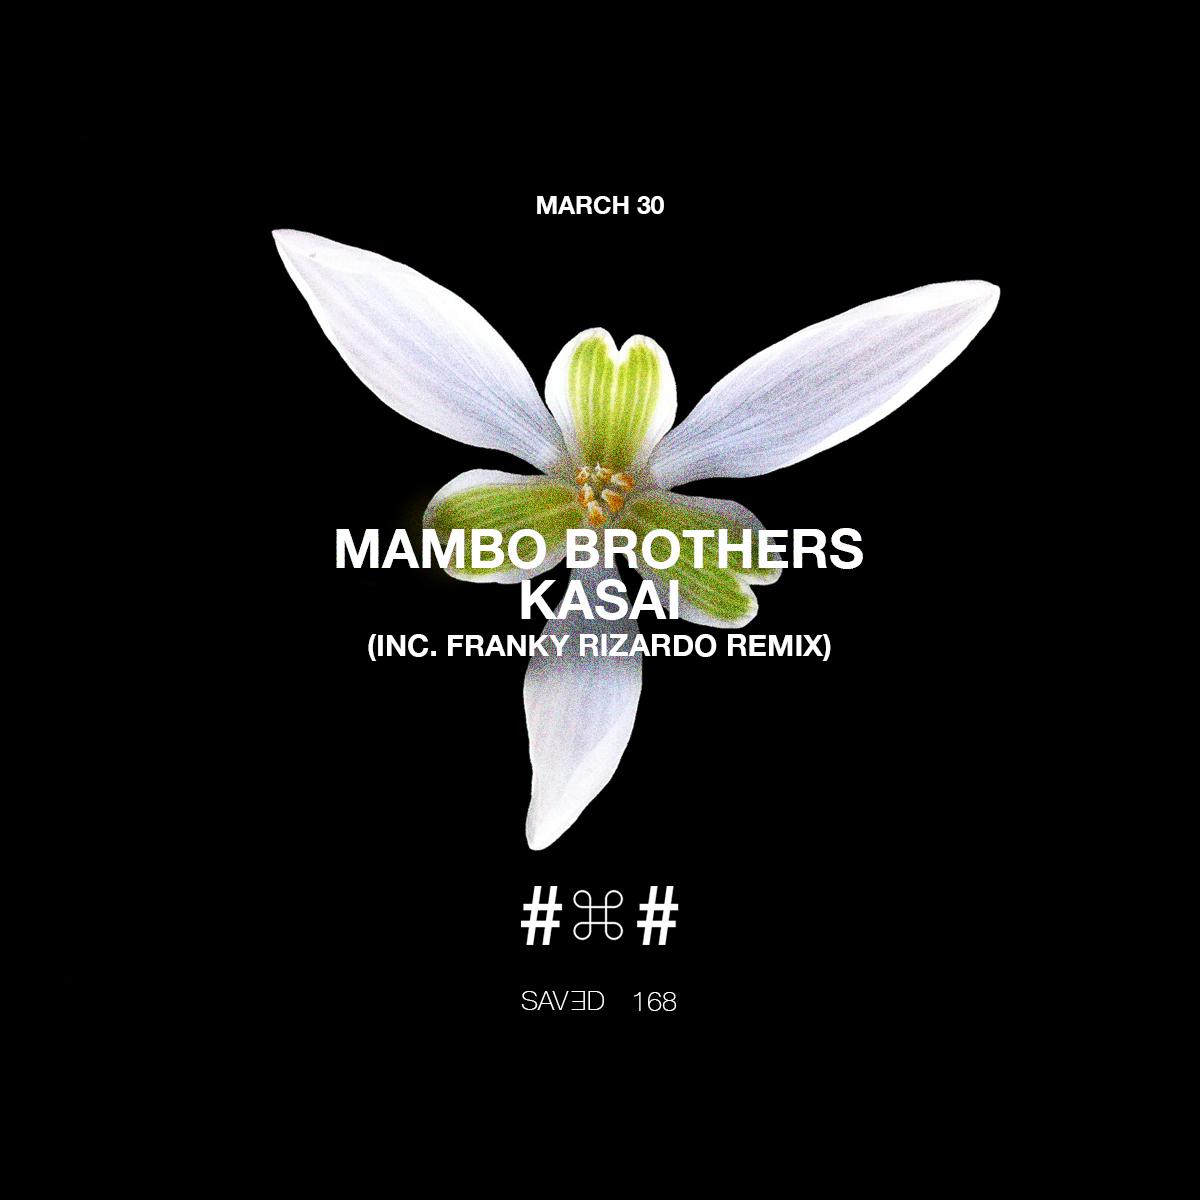 Mambo Brothers release KASAI + Franky Rizardo remix